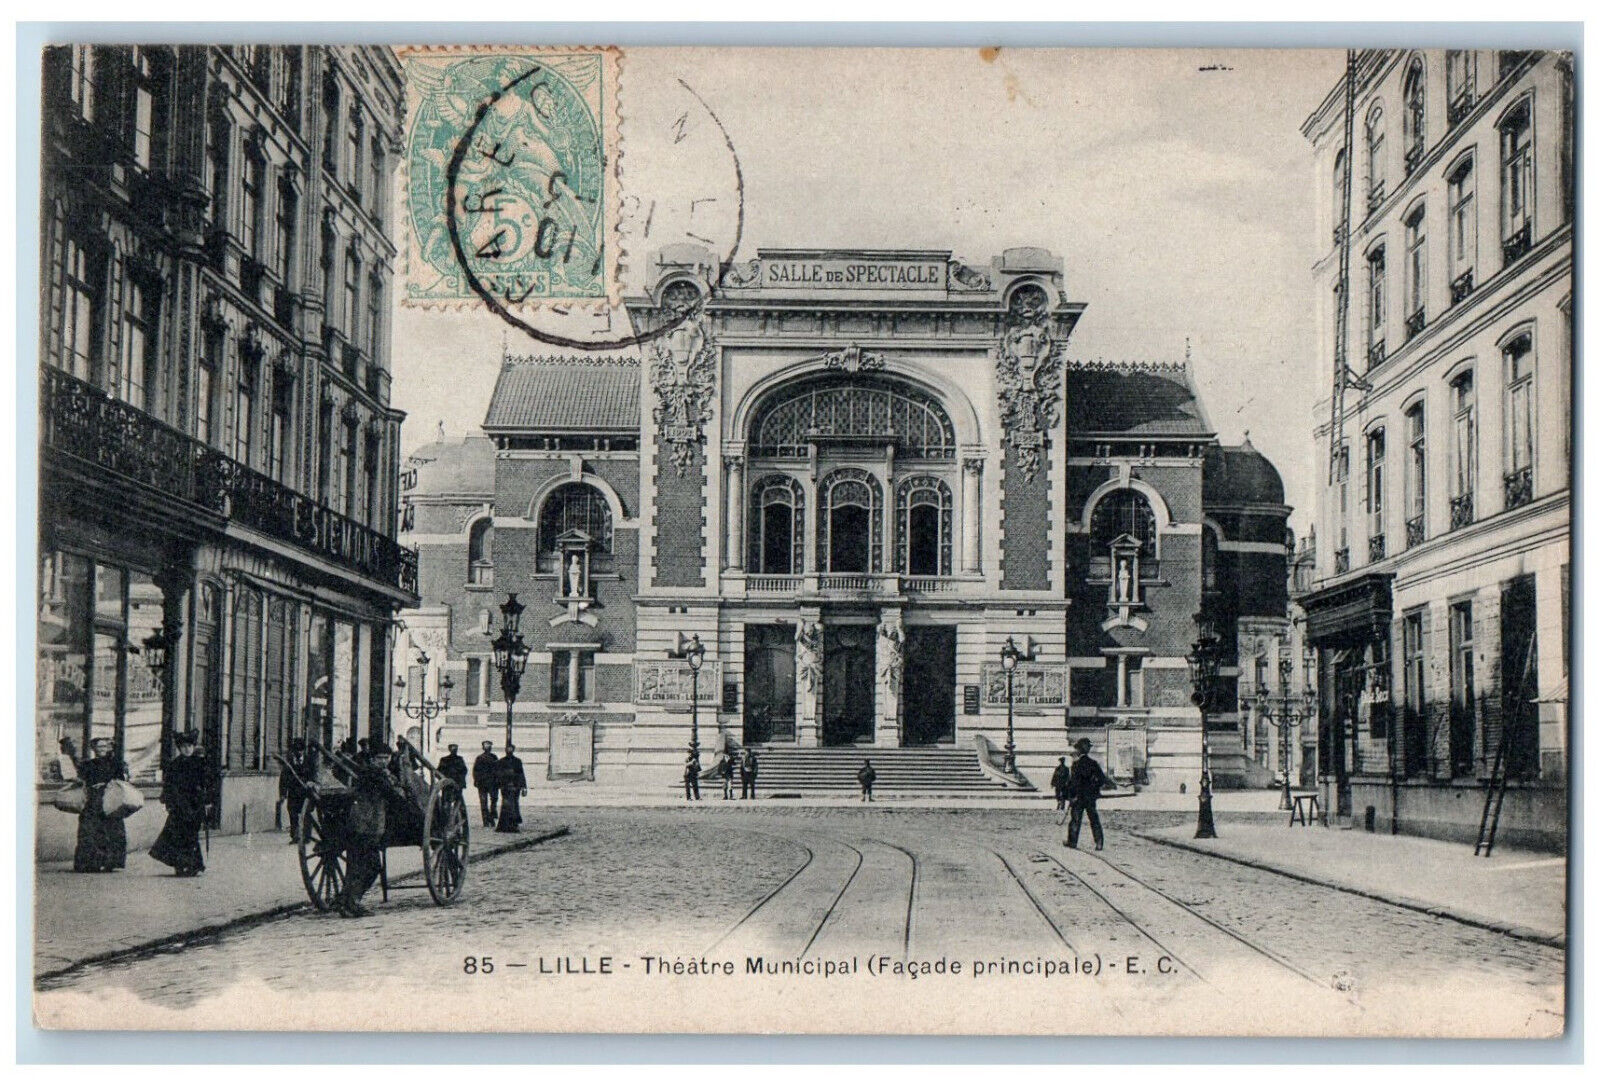 Lille Nord France Postcard Municipal Theater Main Facade E.C. 1905 Antique